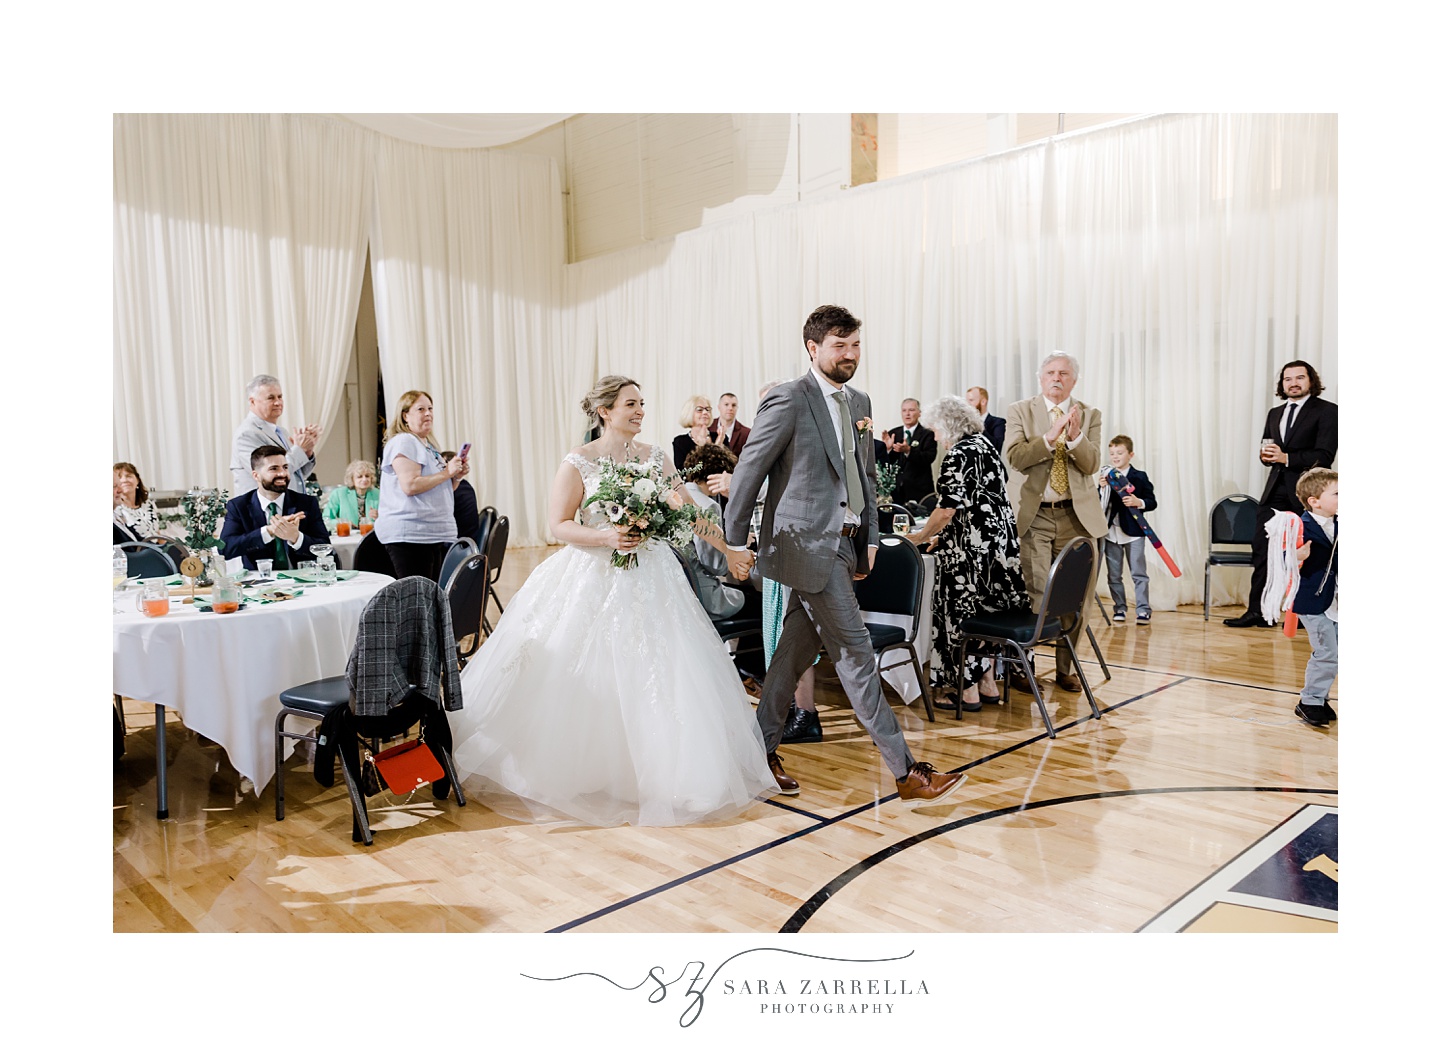 groom leads bride to dance floor during Greenwich RI wedding reception